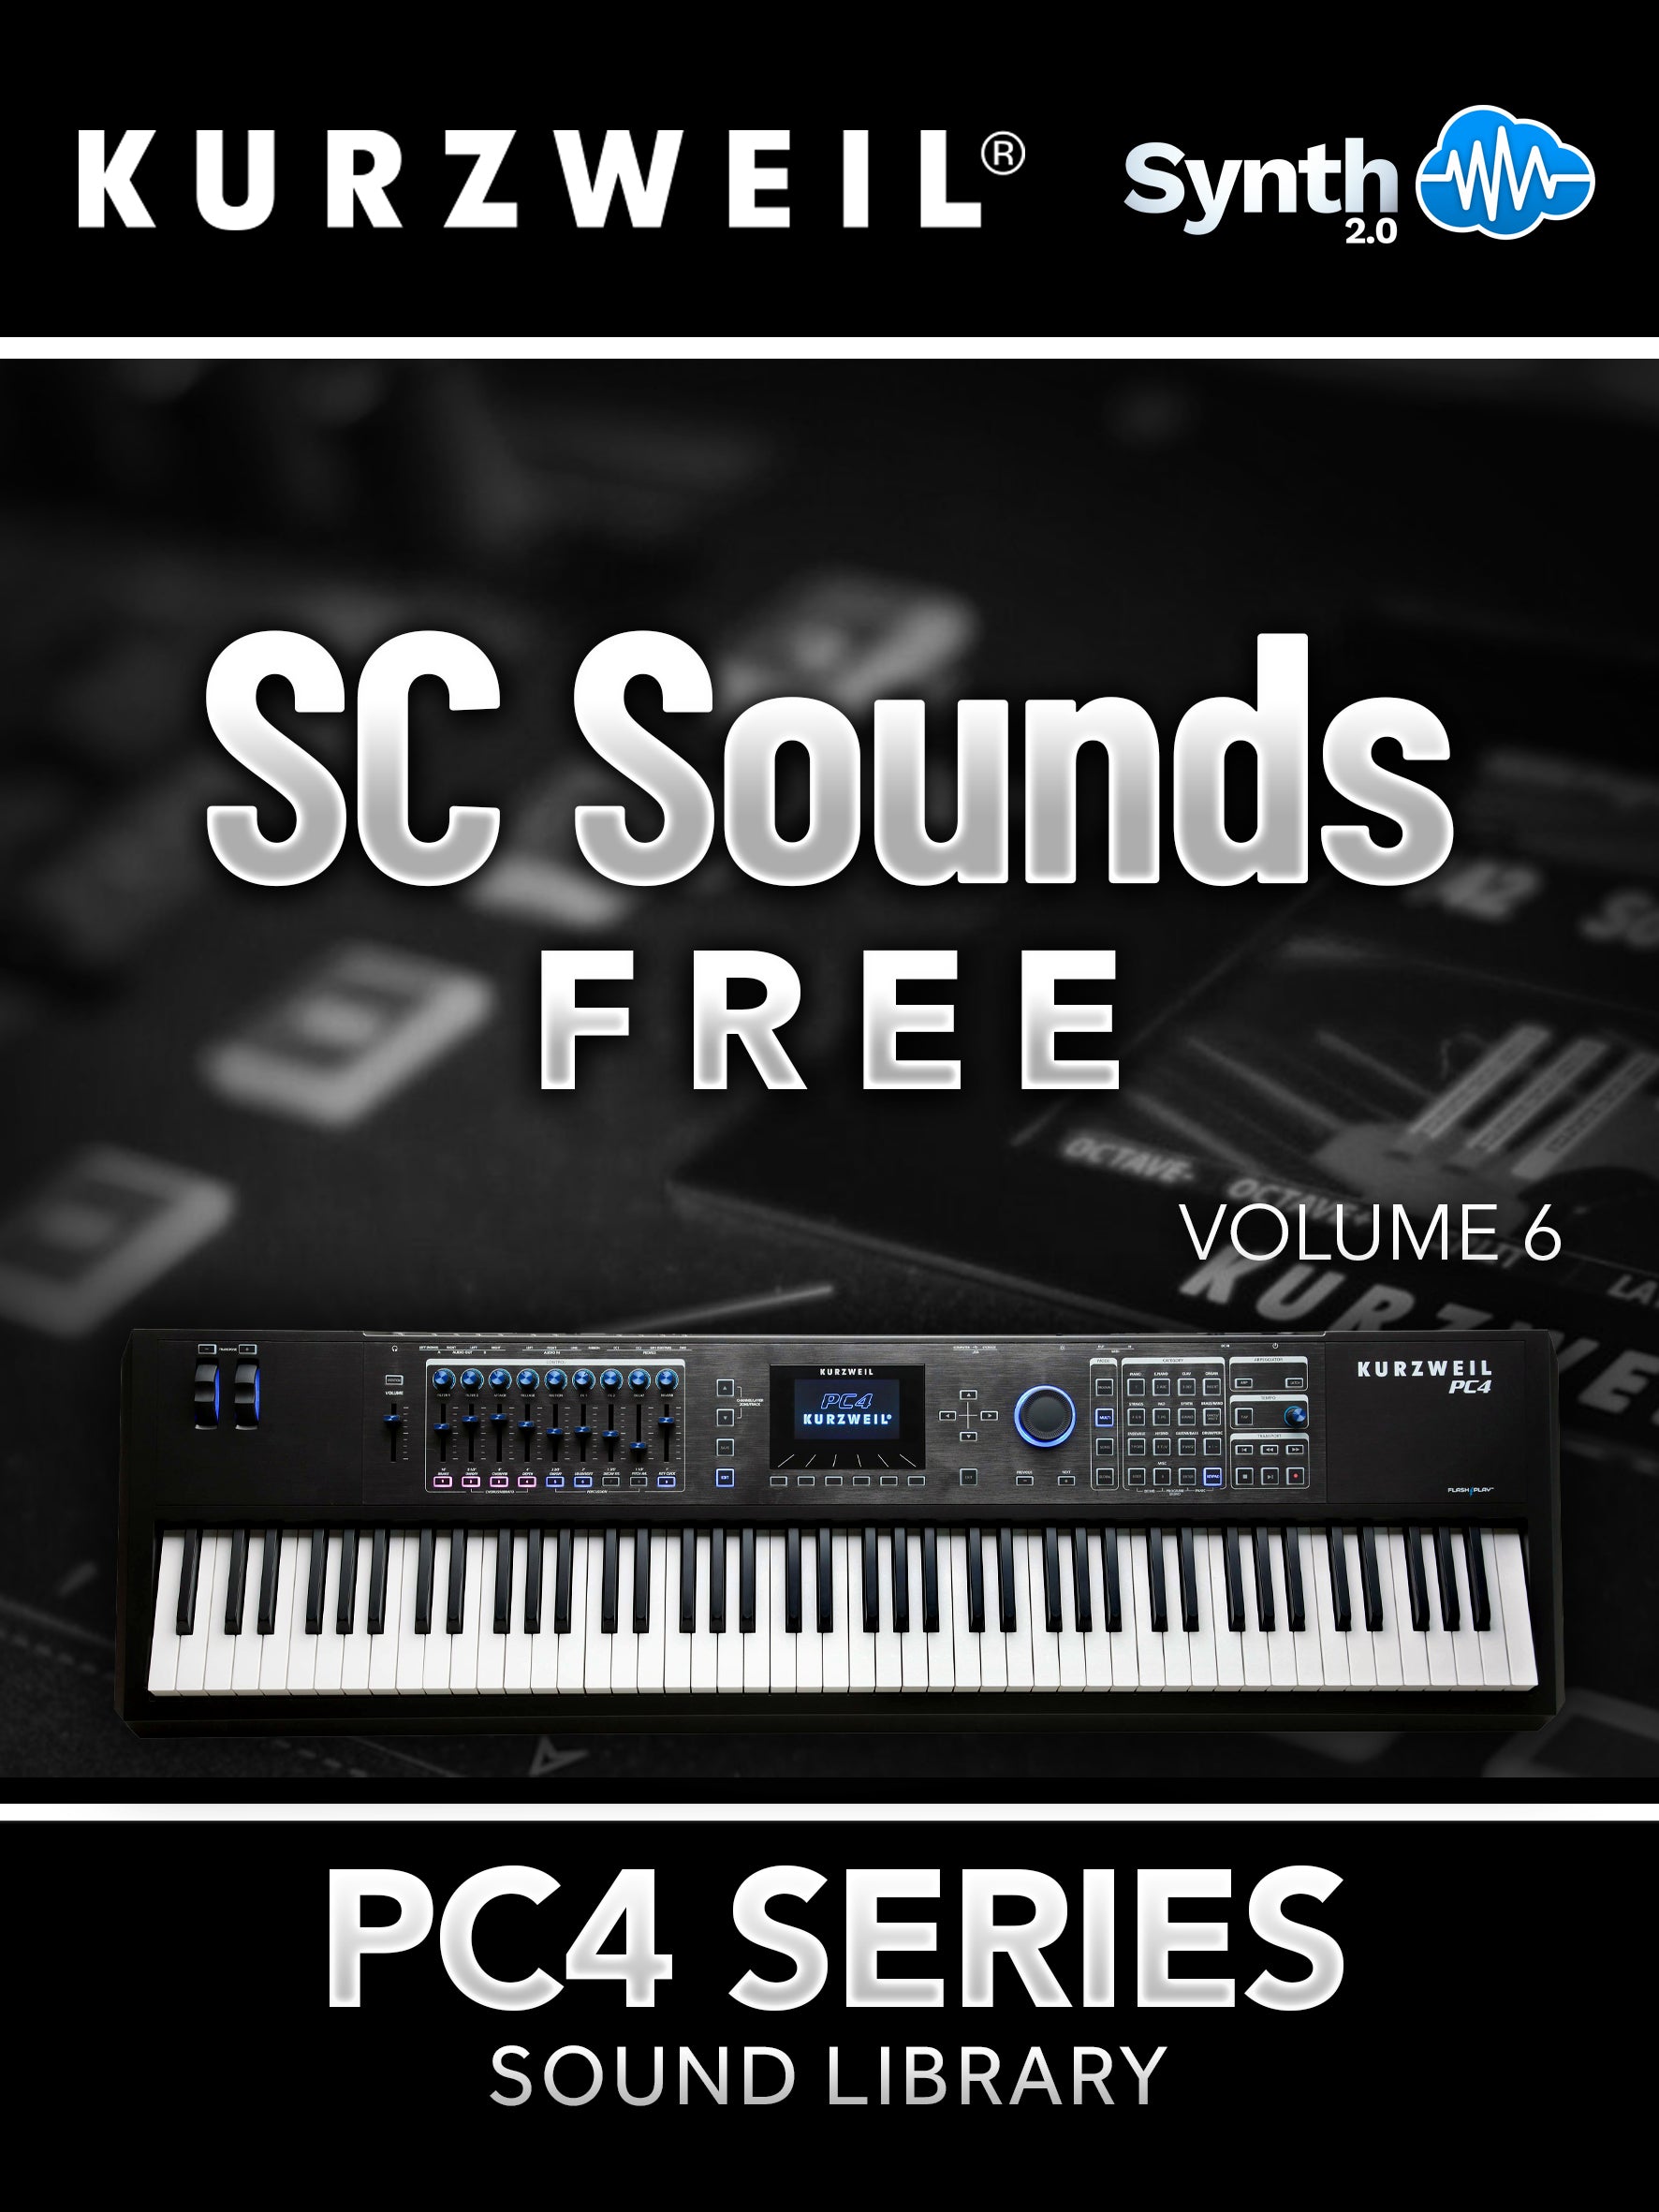 PC4029 - SC Sounds Free Vol.6 - Kurzweil PC4 Series ( 10 presets )